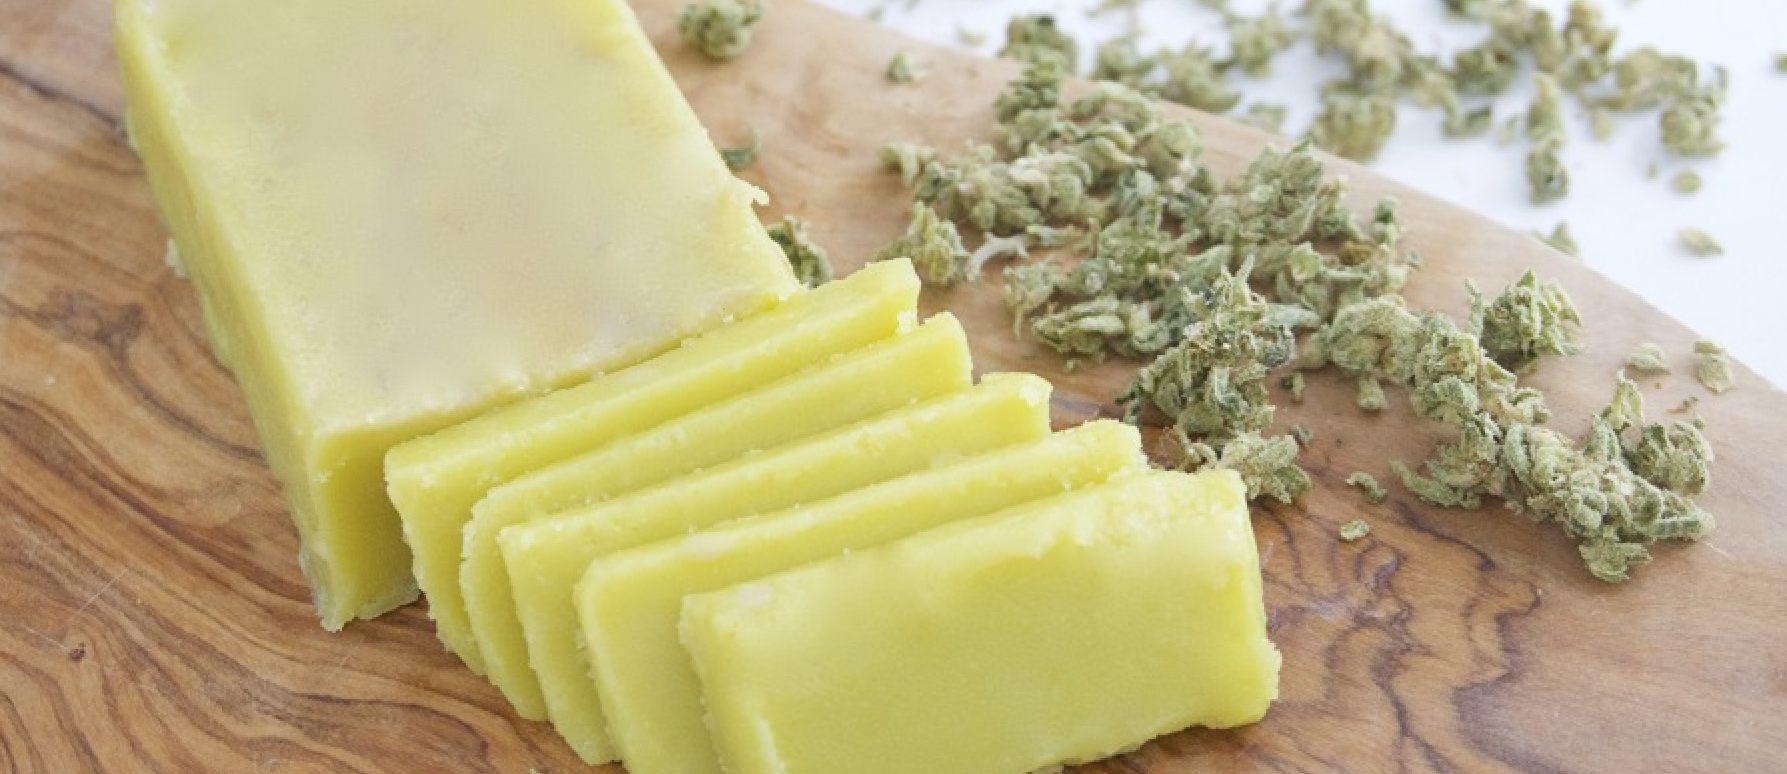 Receta de Mantequilla Medicinal vegana con Marihuana